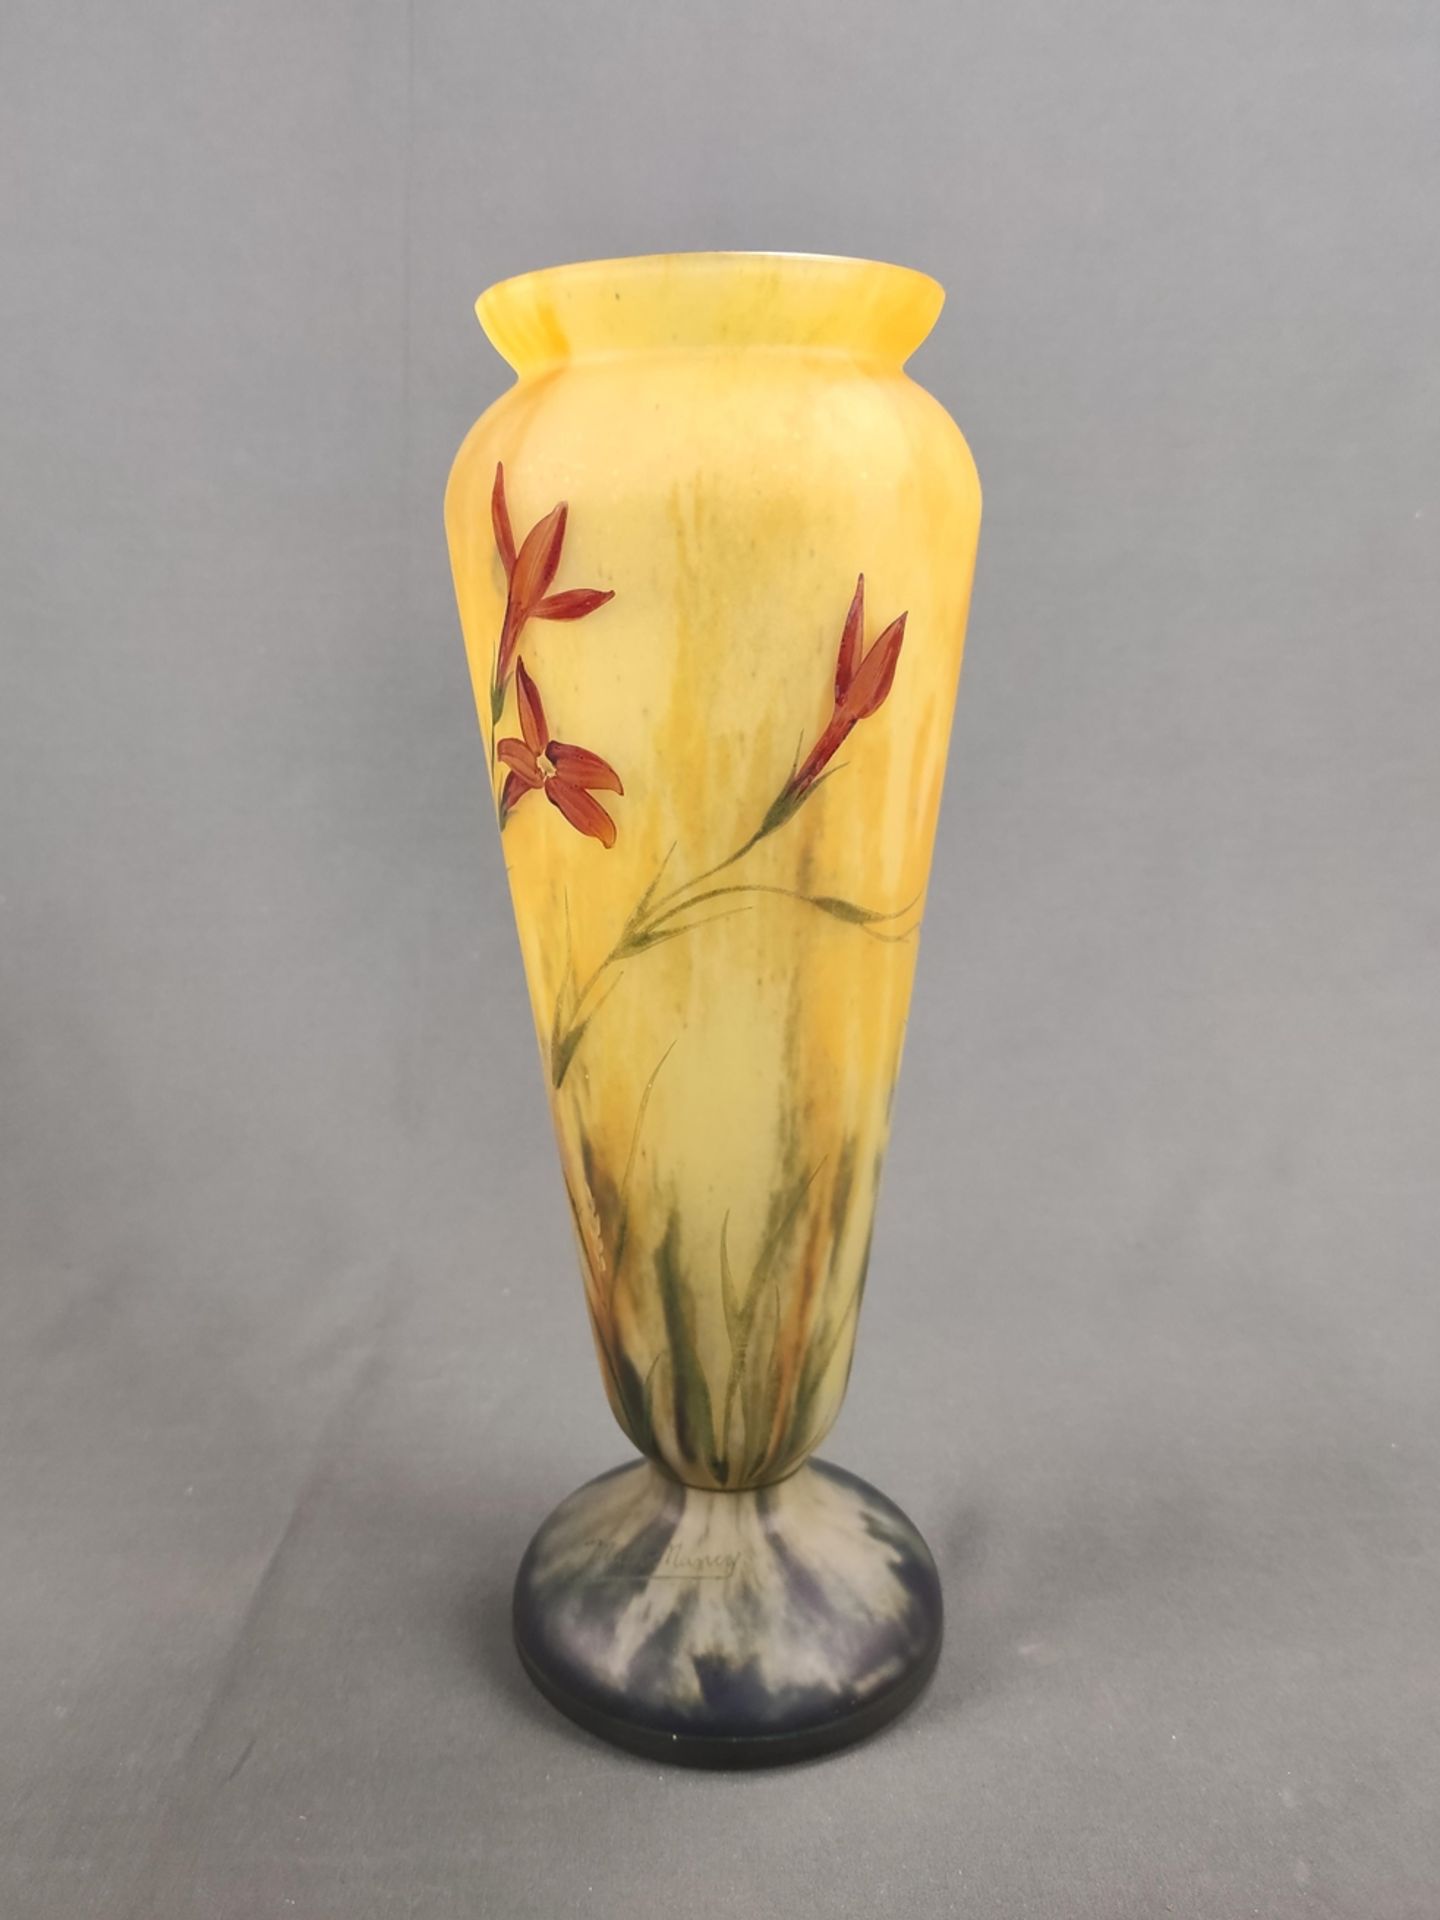 Vase Verrerie Belle Étoile, Croismare, c. 1930, colourless glass with orange-yellow powder fusion,  - Image 2 of 4